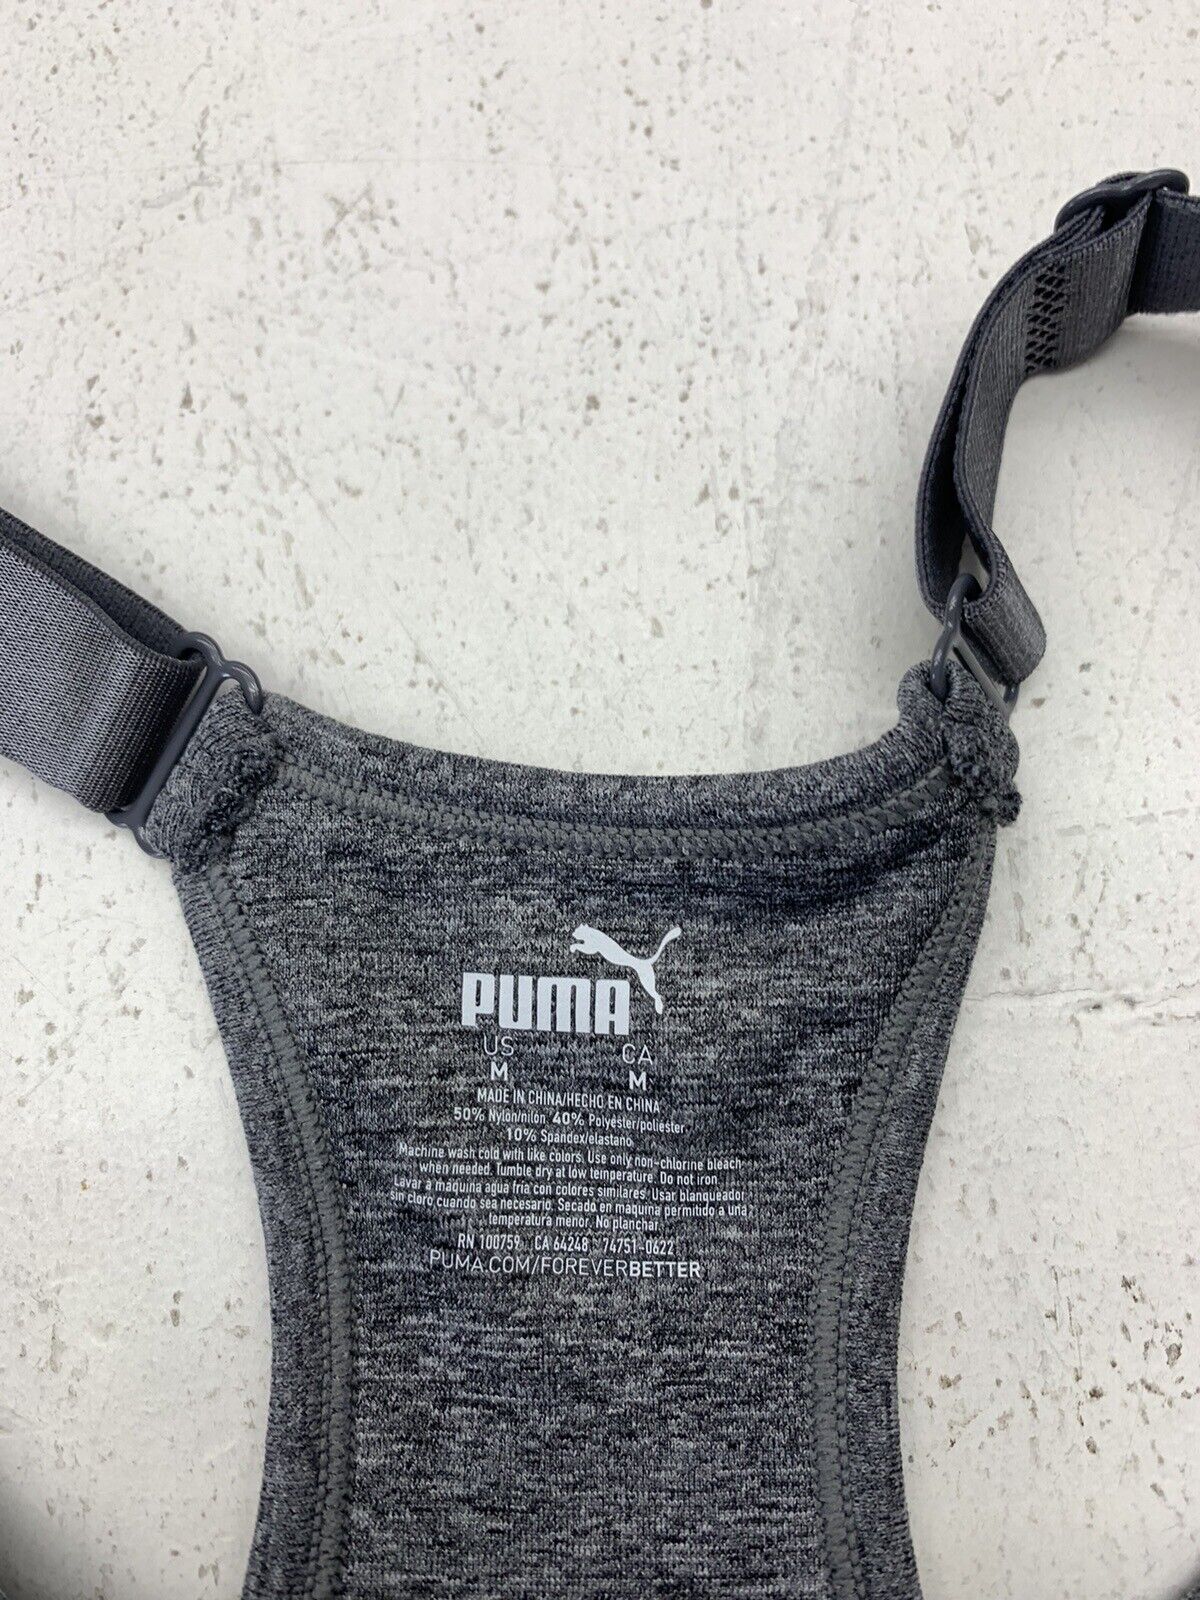 Puma Womens Grey Sports Bra Size Medium - beyond exchange